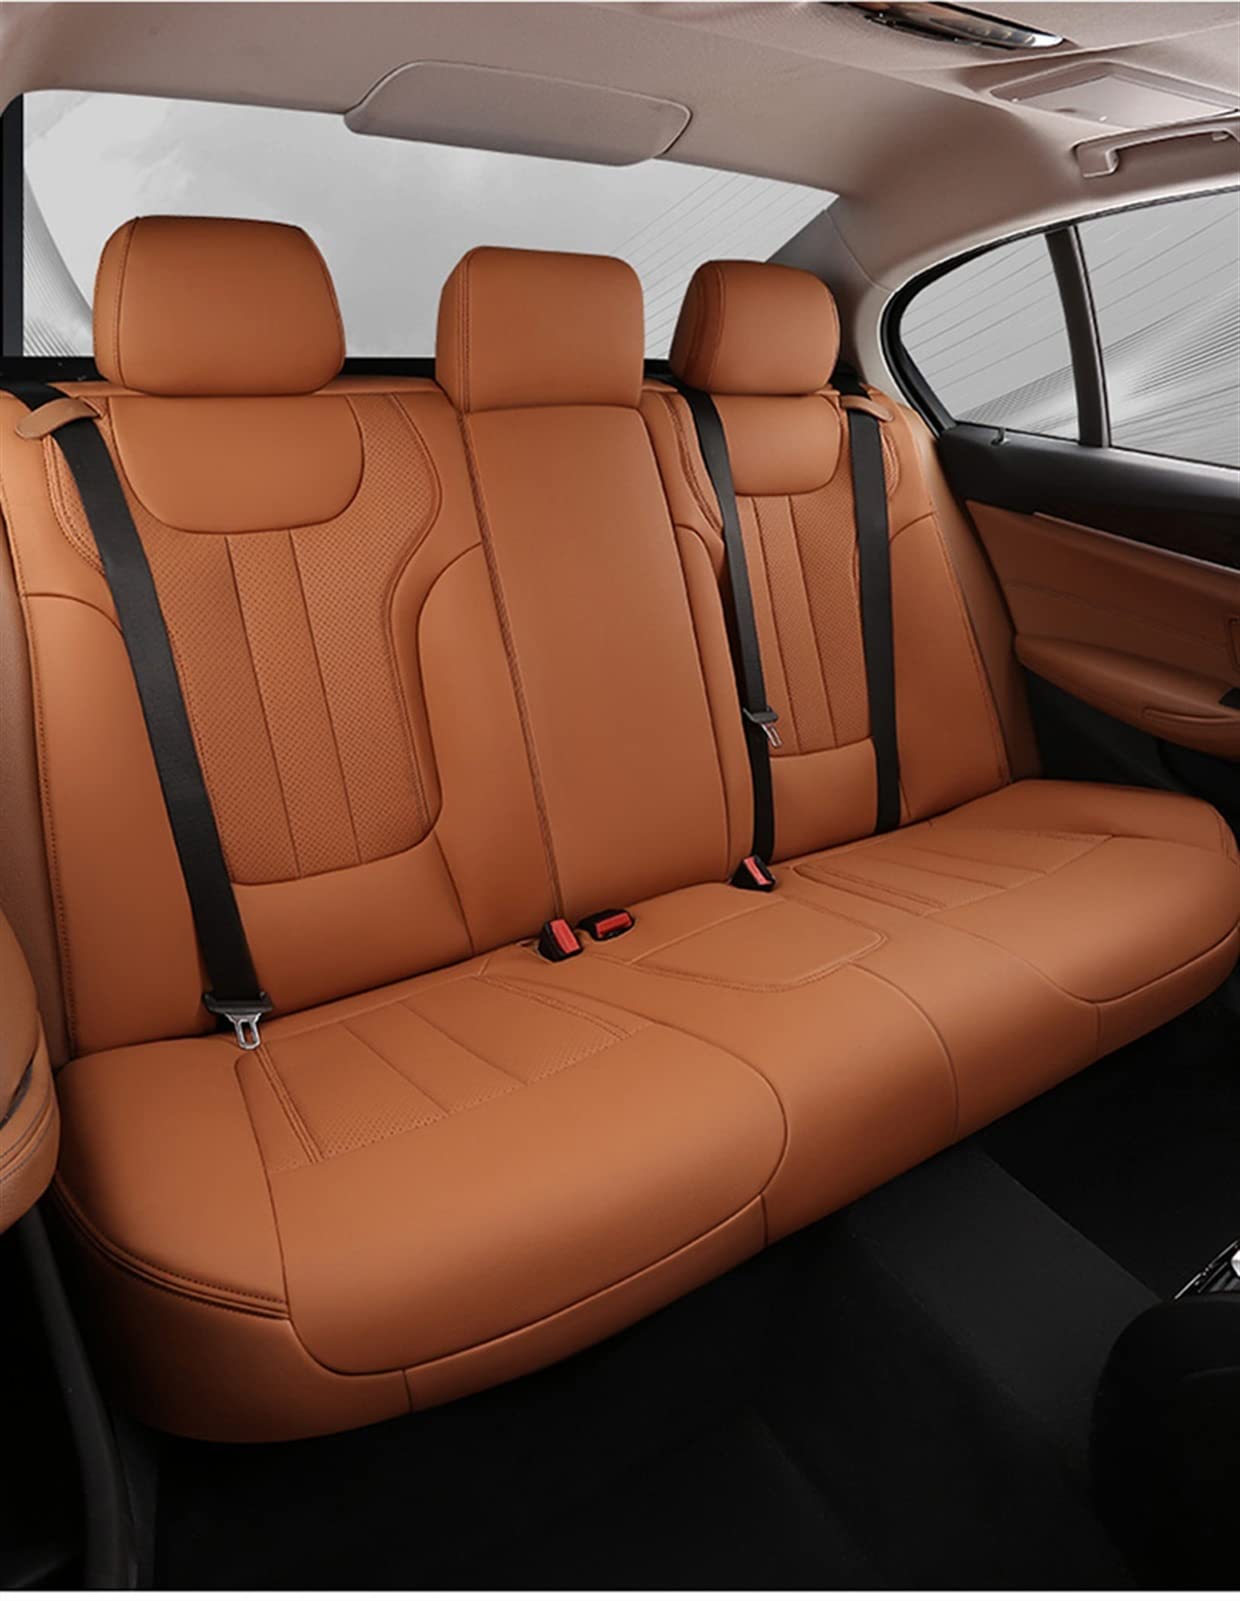 TATARENGS Automobilinnenraum Kompatibel Mit Ford Für Explorer 2020 2013 2014 2016 2017 Auto-Innenraum-Fahrersitzbezug Sitzbezug-Schutz(A) von TATARENGS